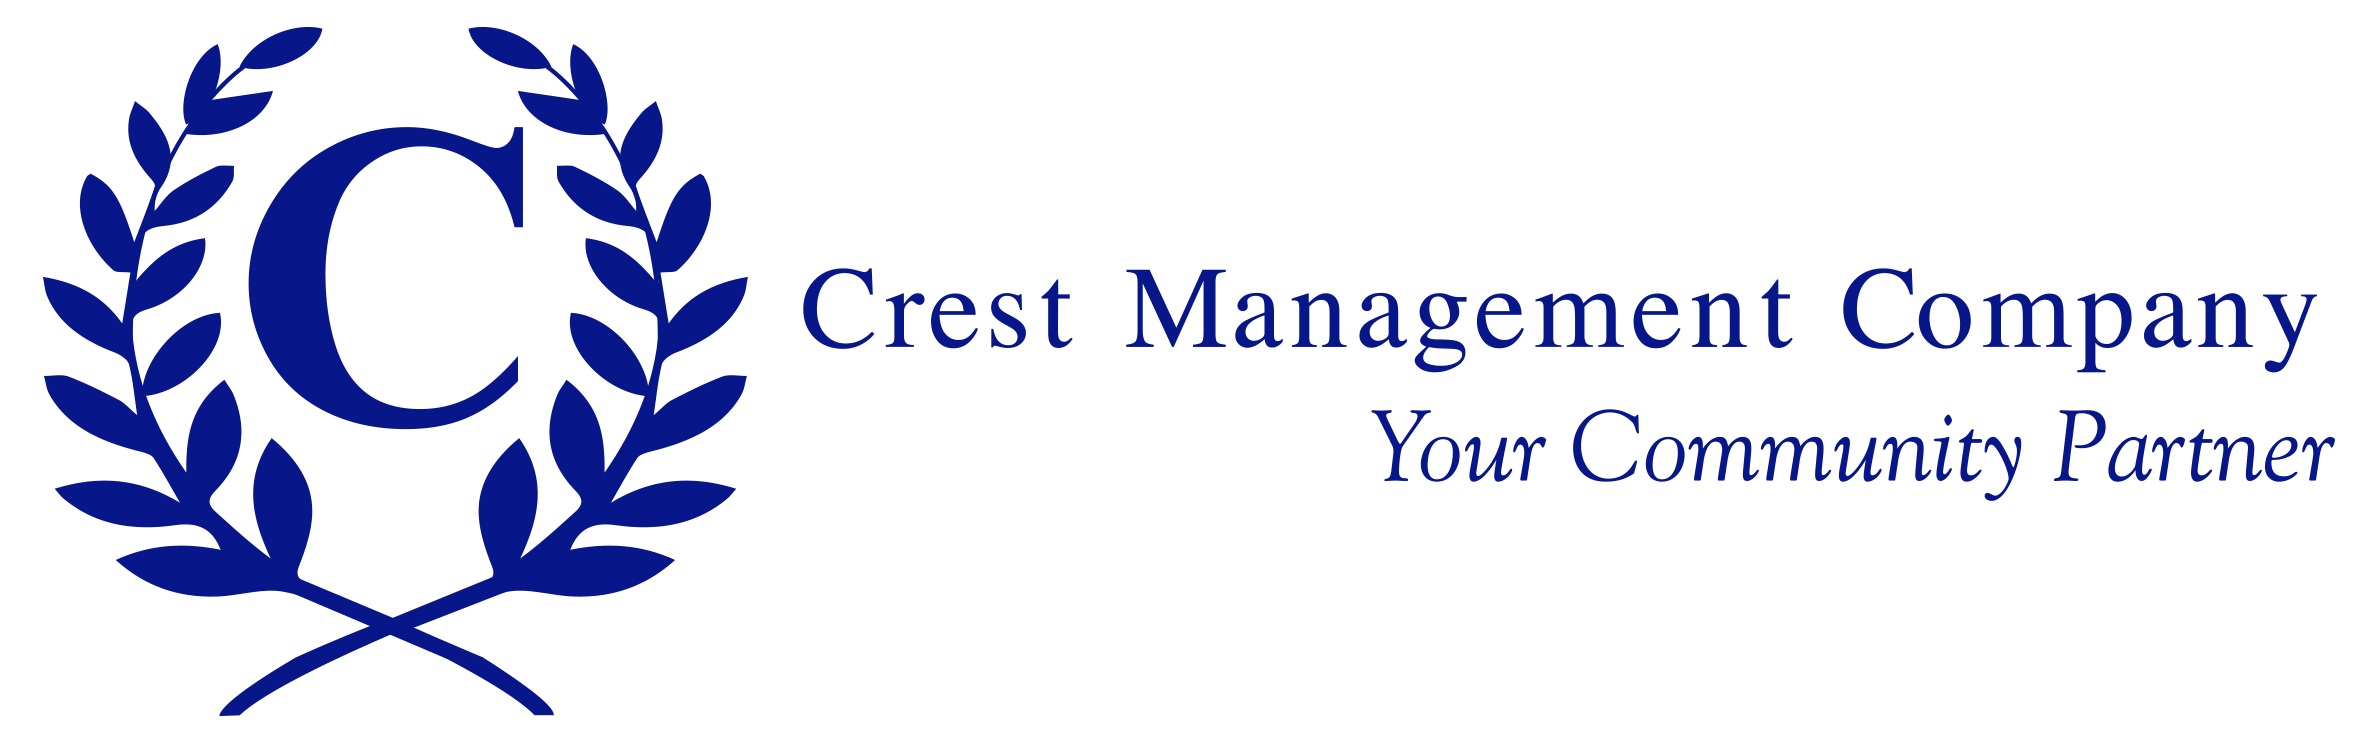 Crest Management Company, AAMC logo